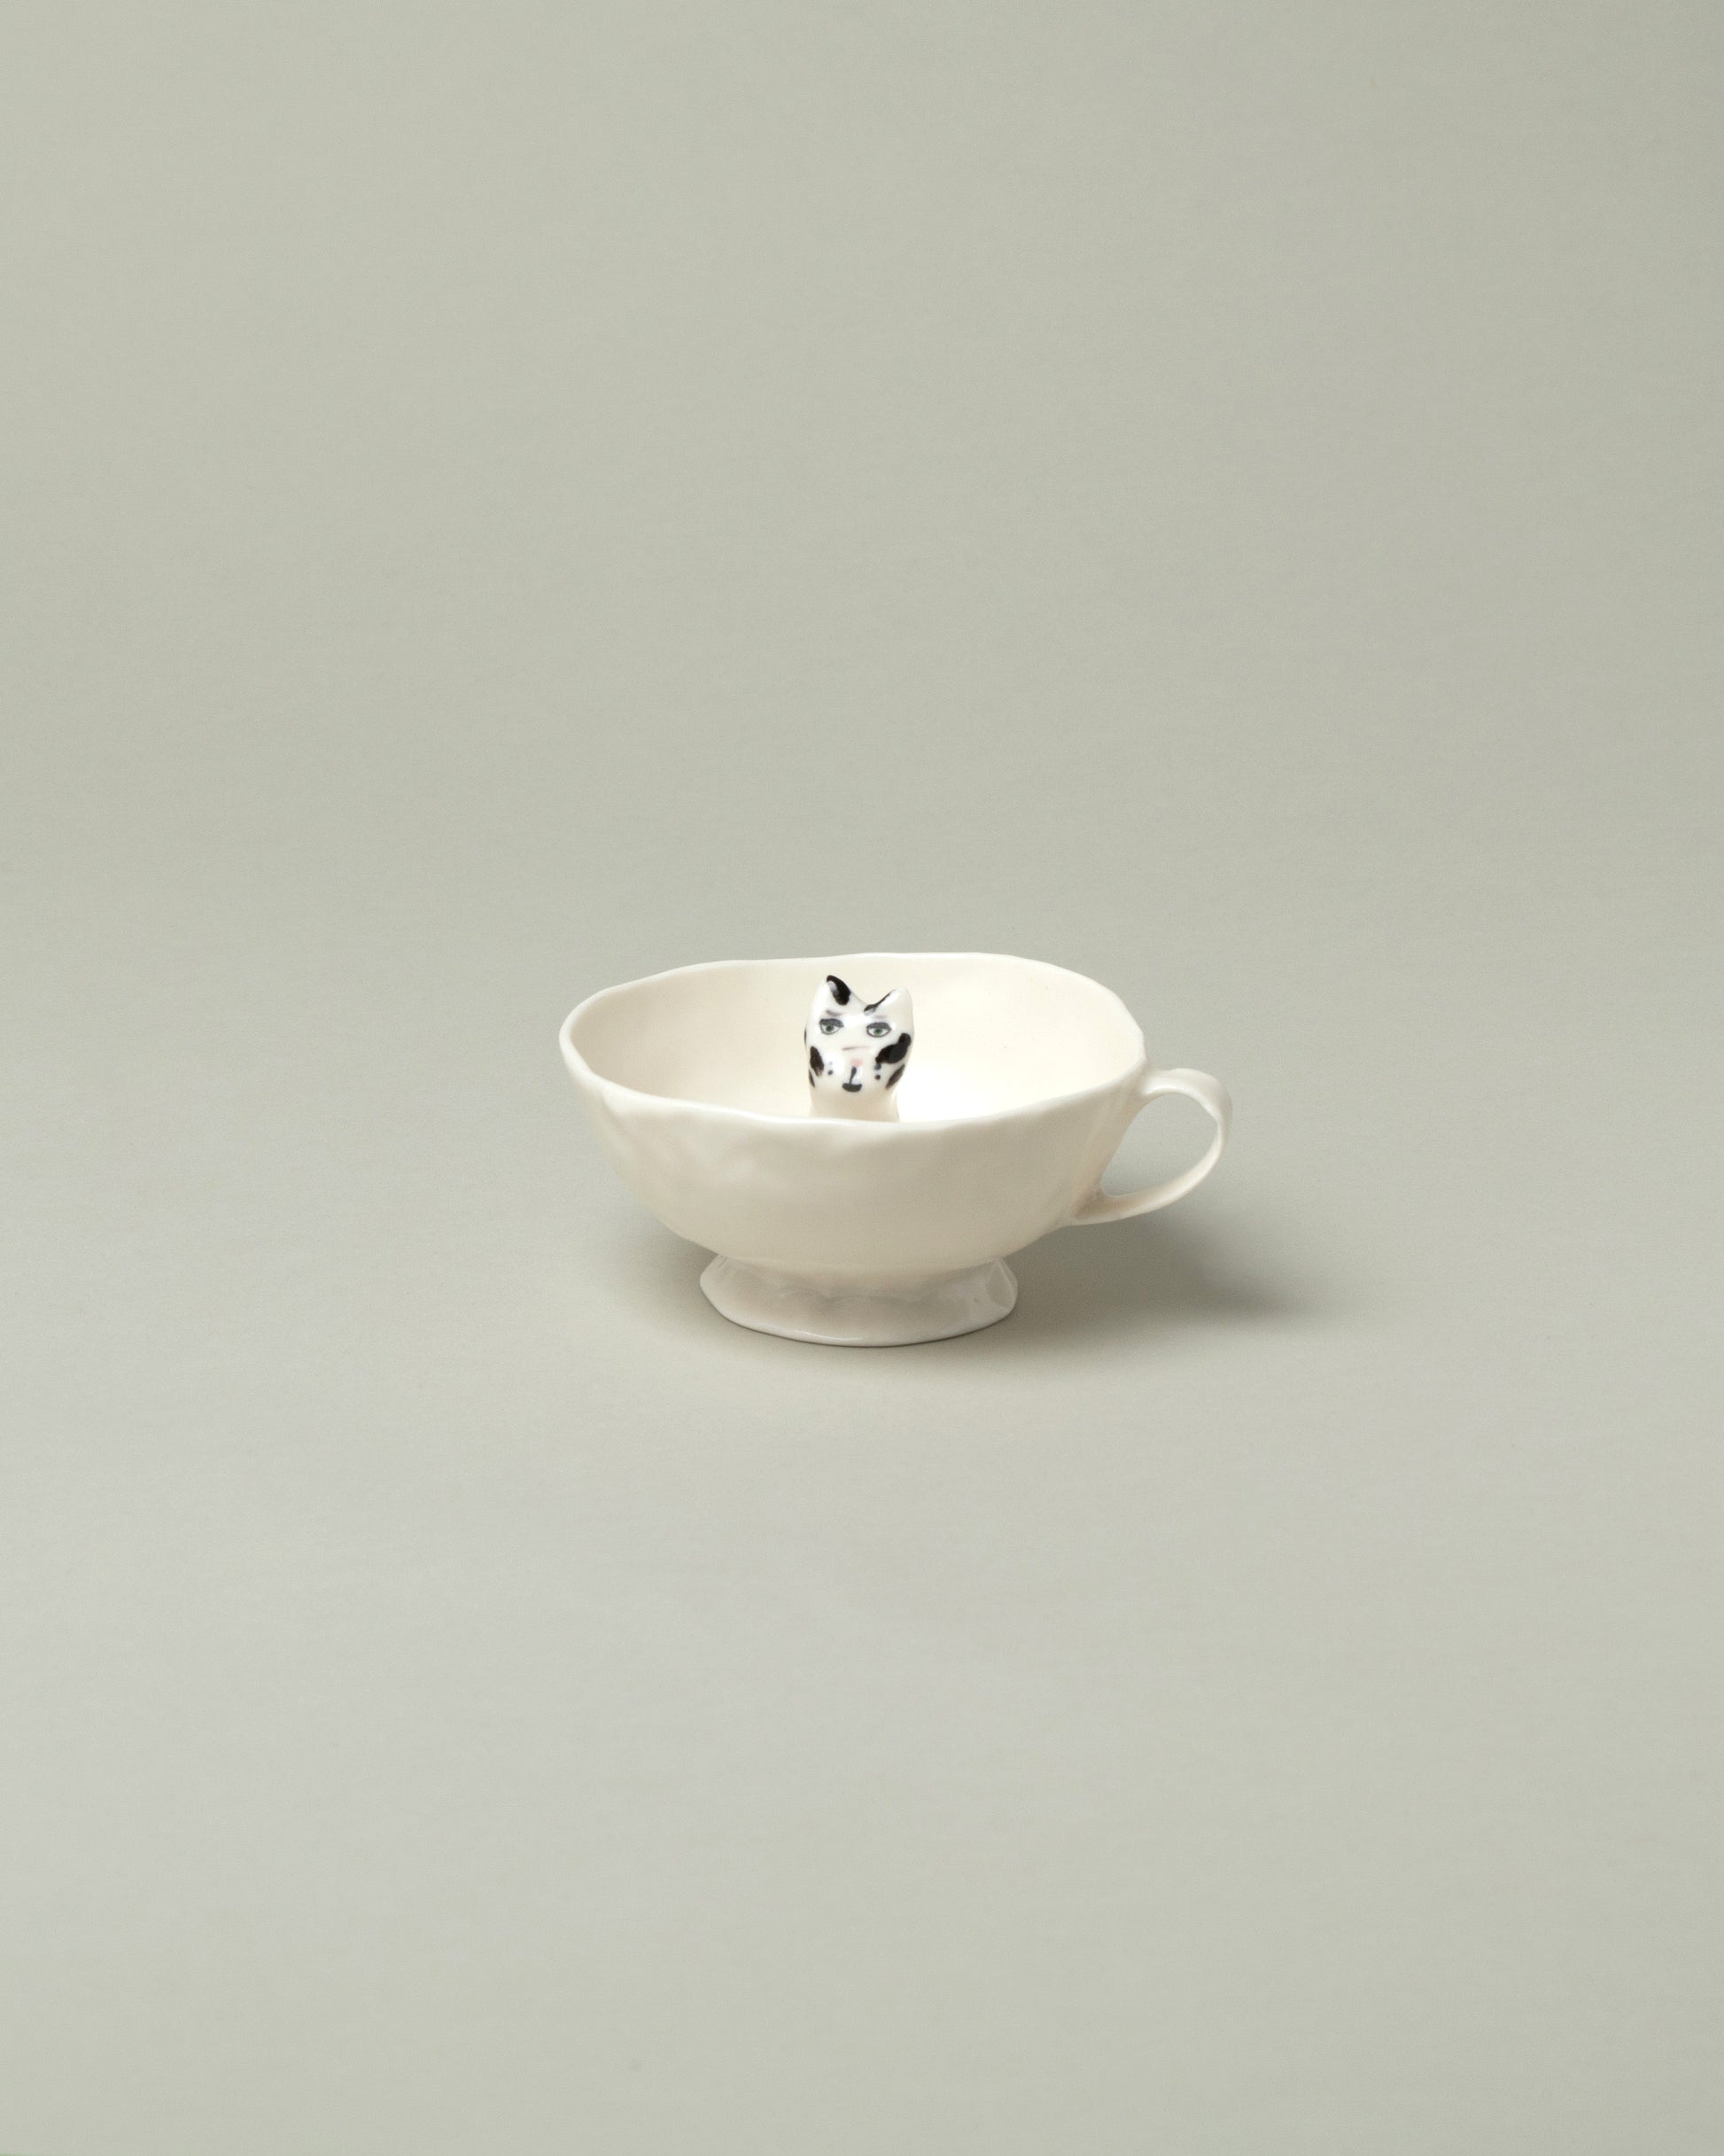 Eleonor Boström Black Spots Cat Cup on light color background.